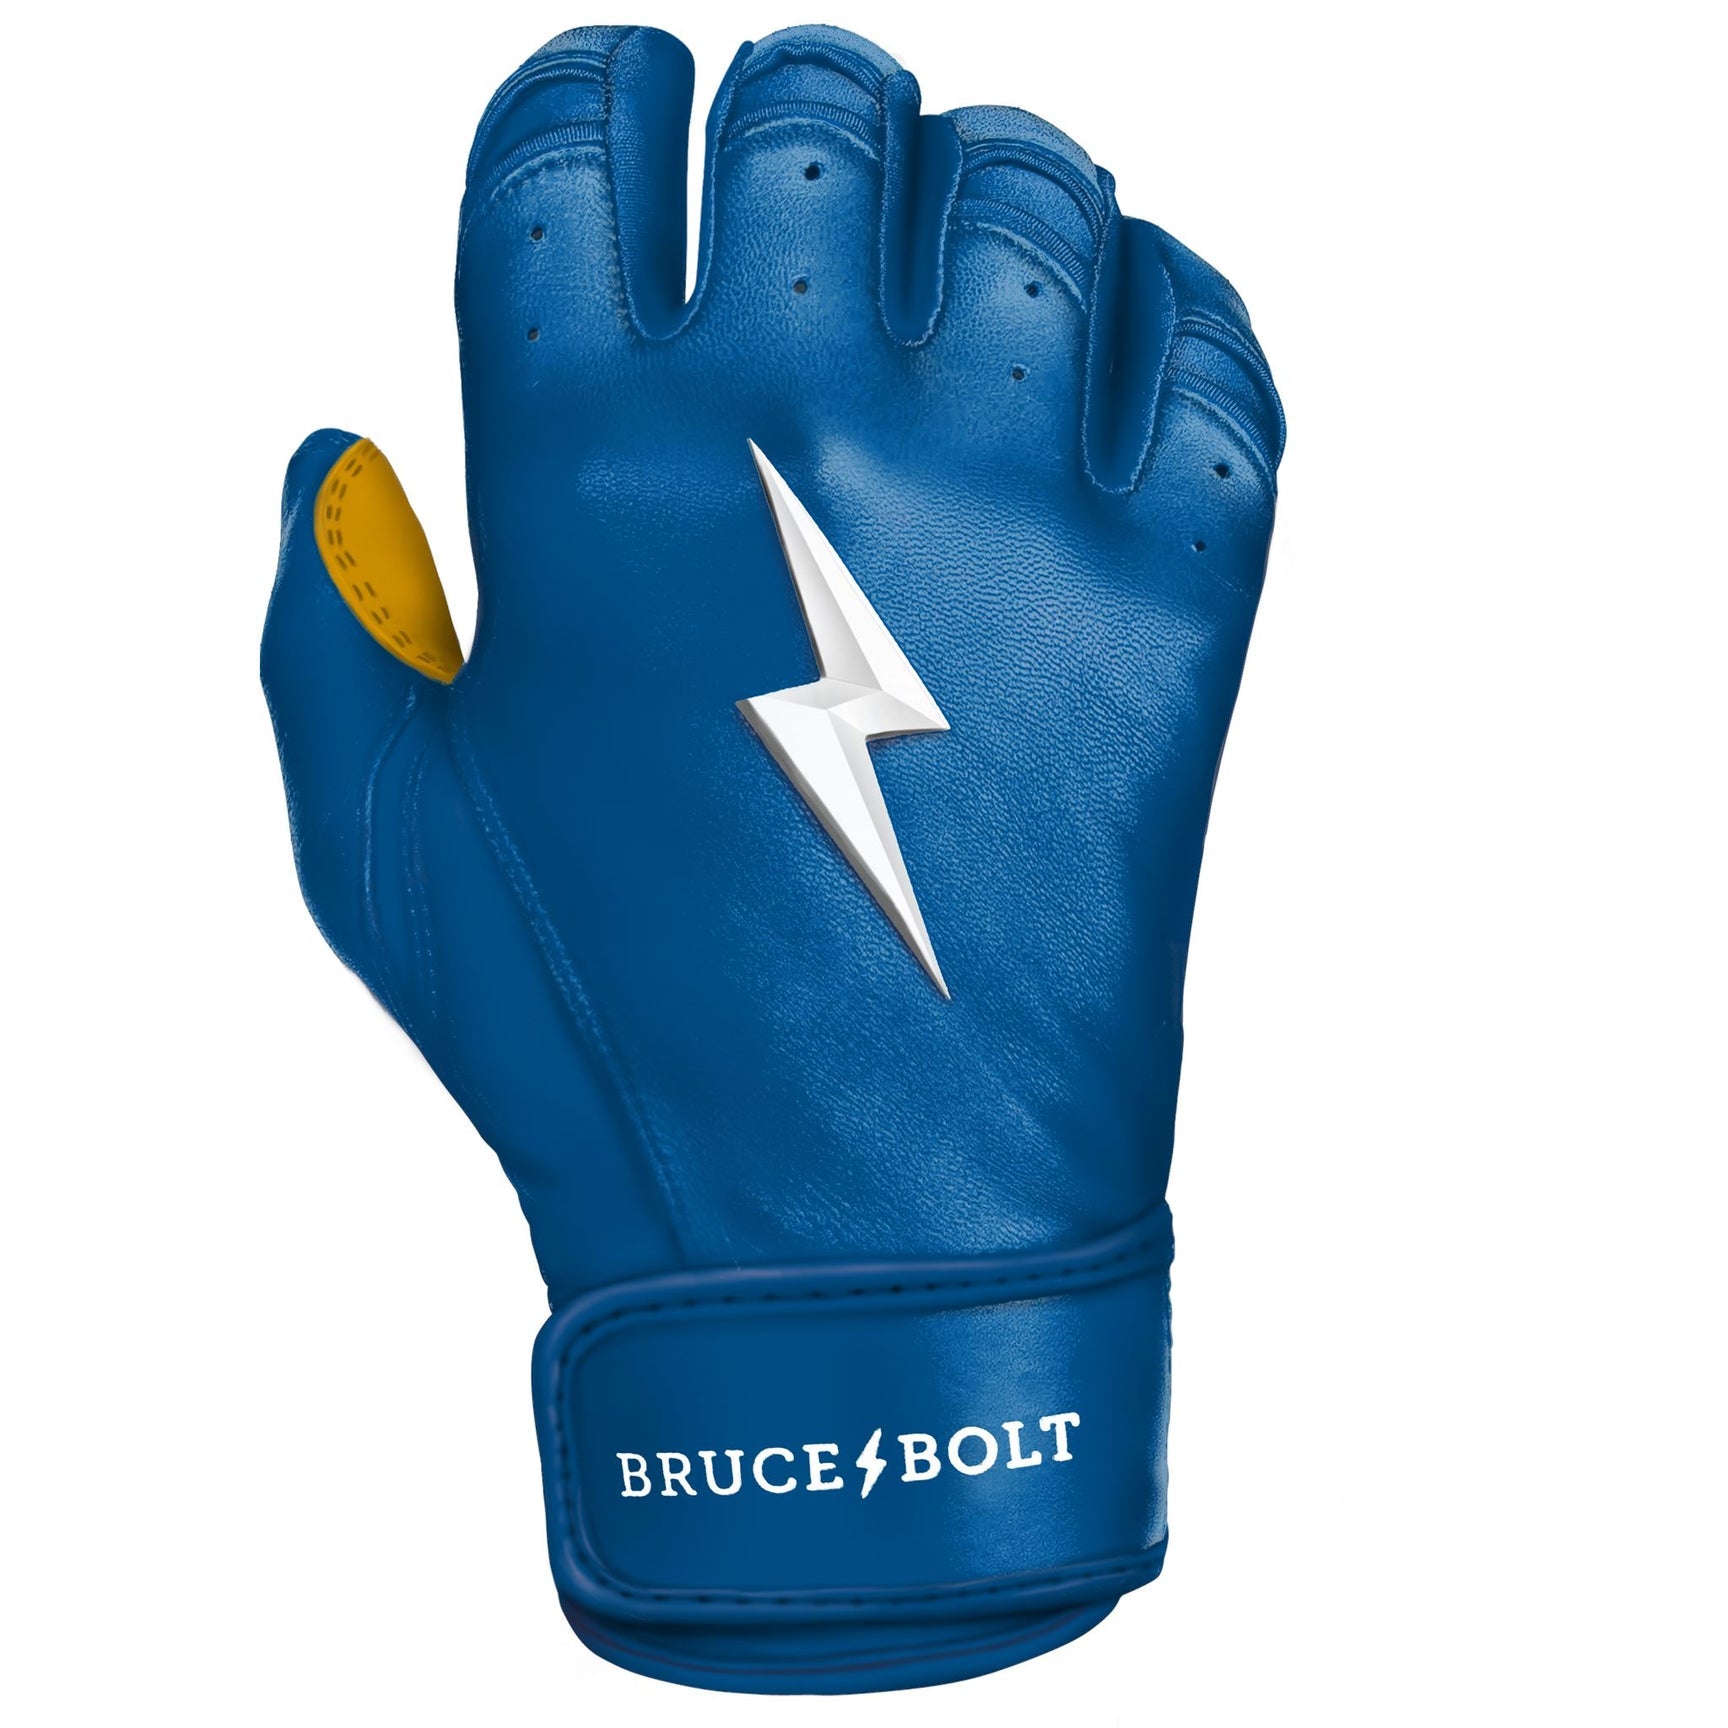 Bruce Bolt Youth Premium Pro Short Cuff Batting Gloves Royal